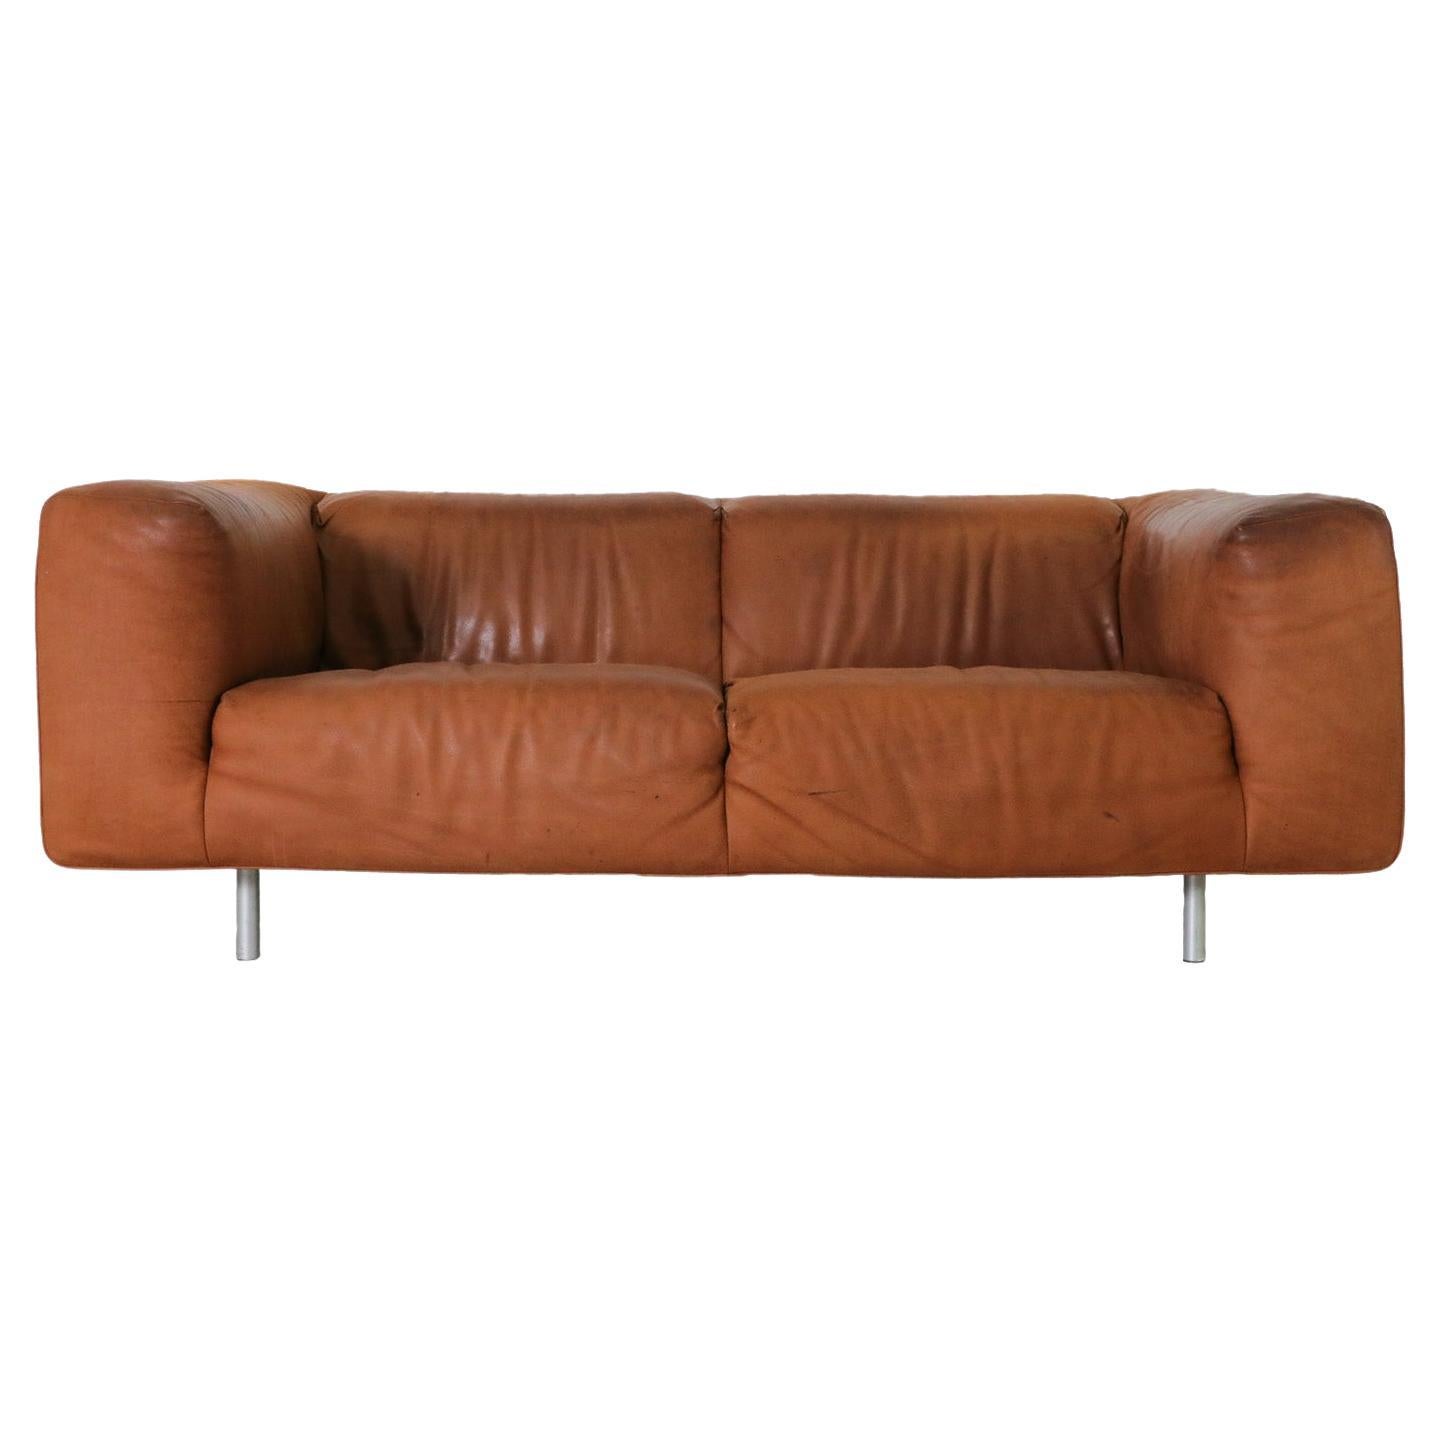 Gerard van den Berg Cognac Leather Soft Form Sofa with Aluminum Legs 